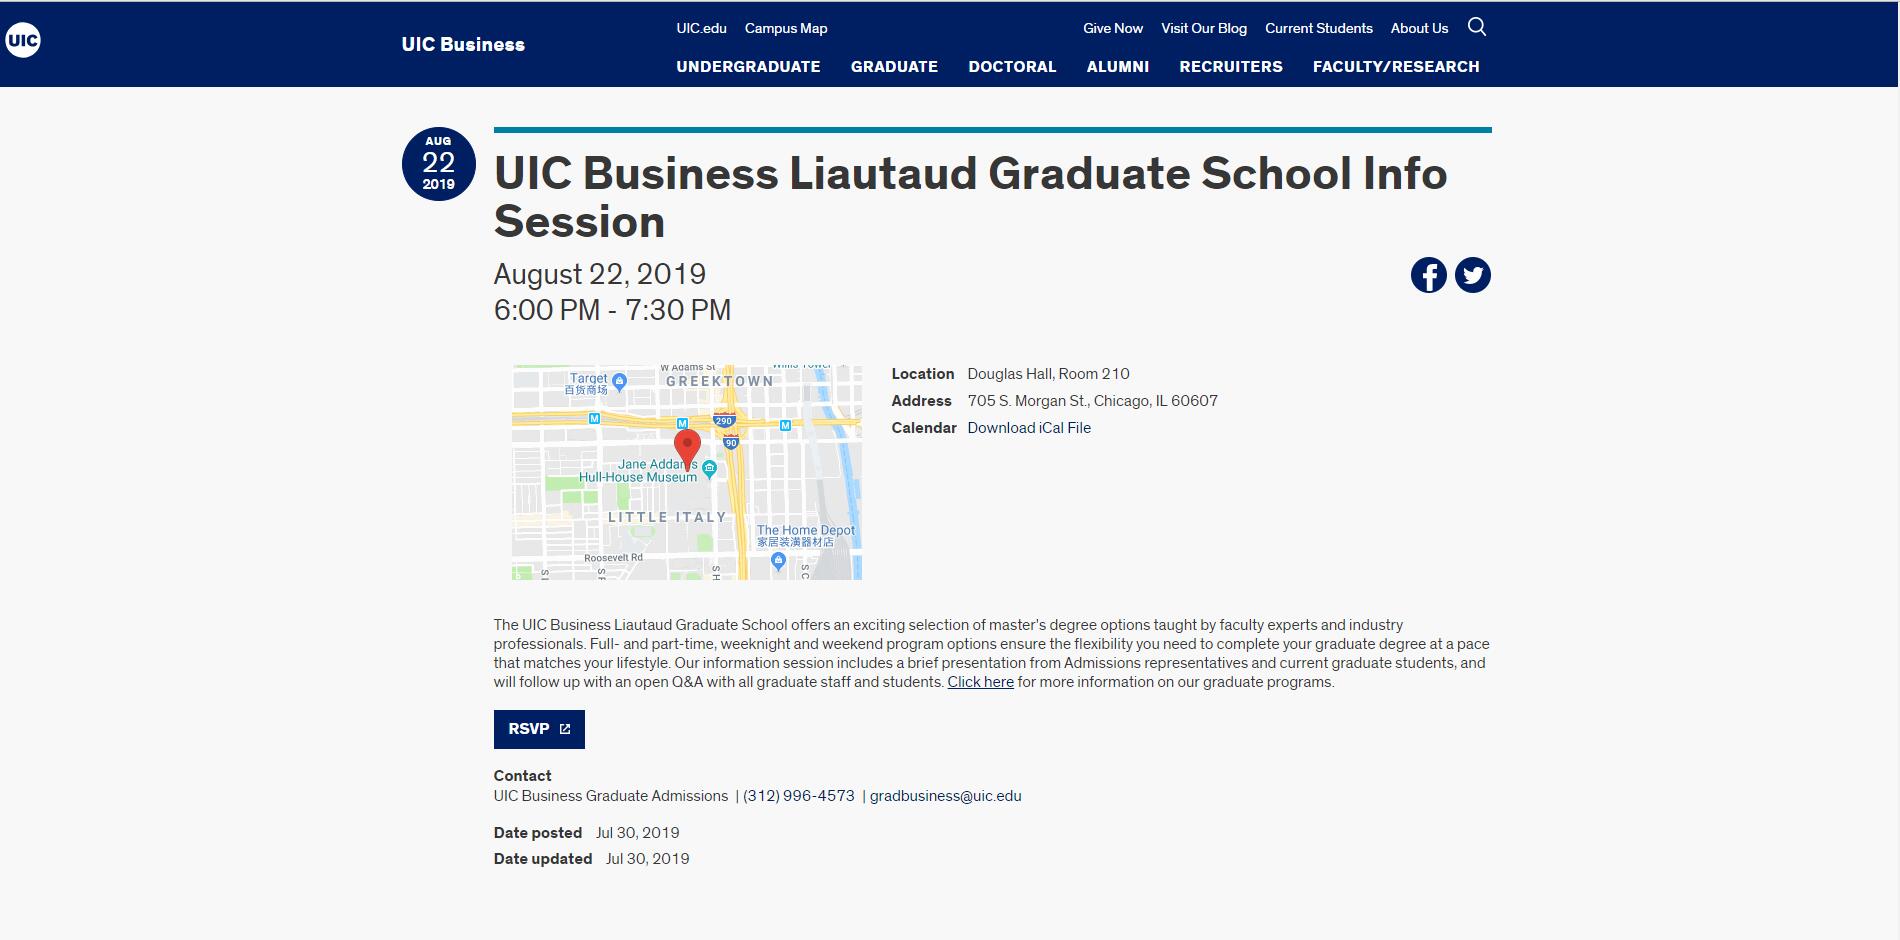 The Liautaud Graduate School of Business at University of Illinois--Chicago